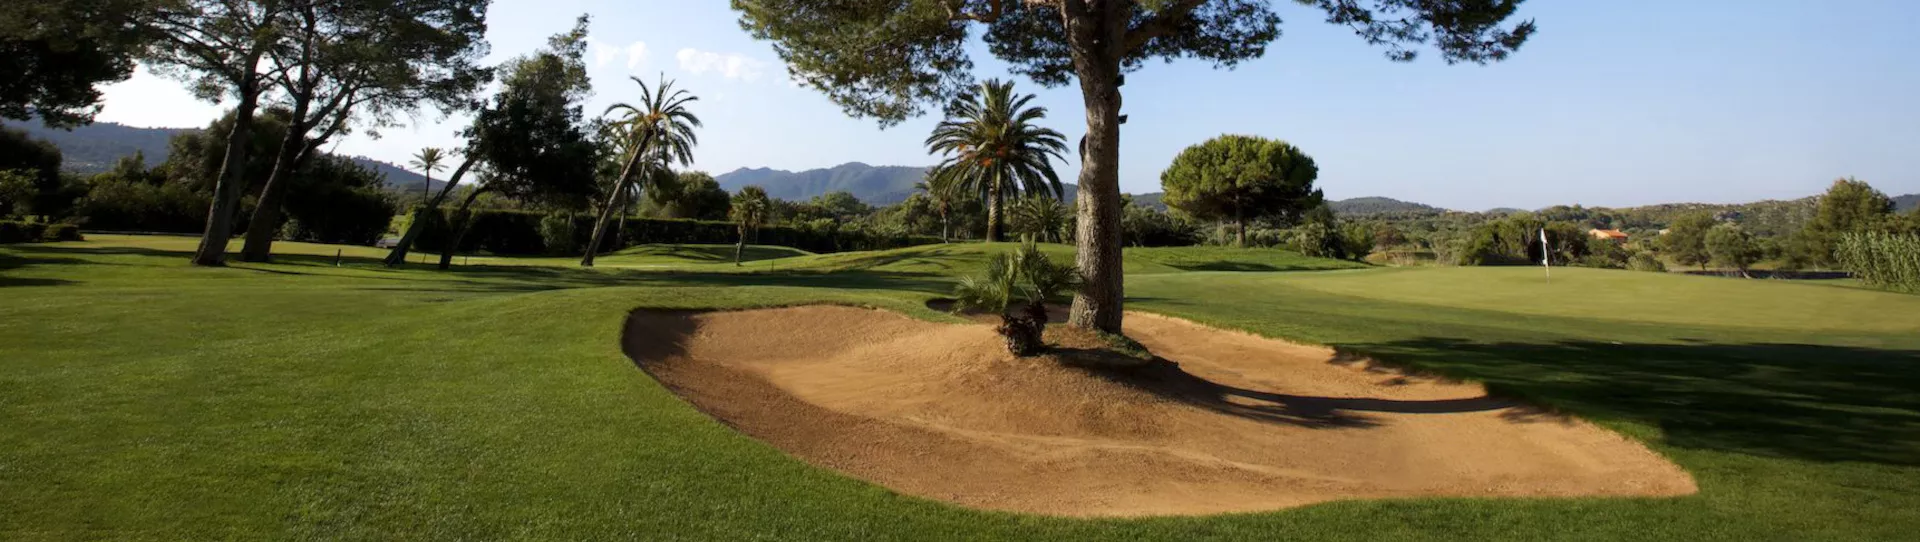 Spain golf courses - Capdepera Golf Course - Photo 2